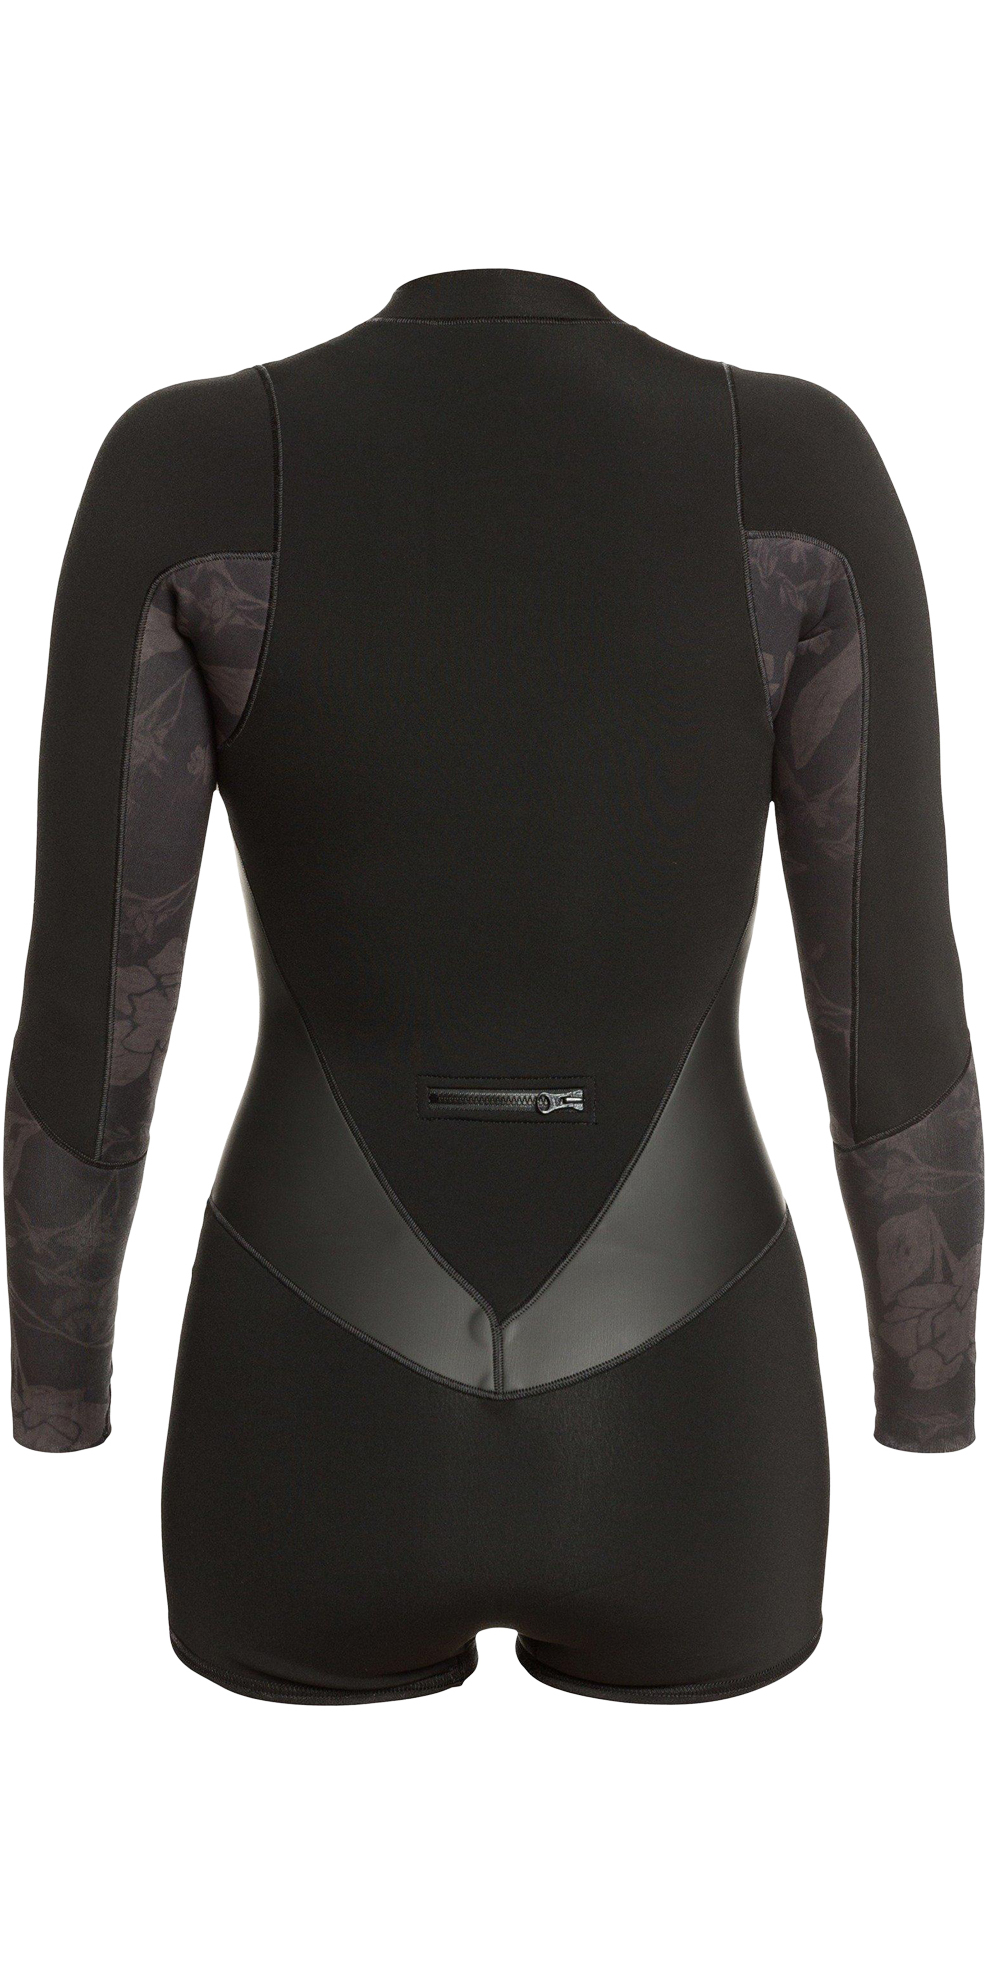 Blac 2021 Roxy Womens Satin 1.5mm Long Sleeve Spring Shorty Wetsuit ERJW403020 